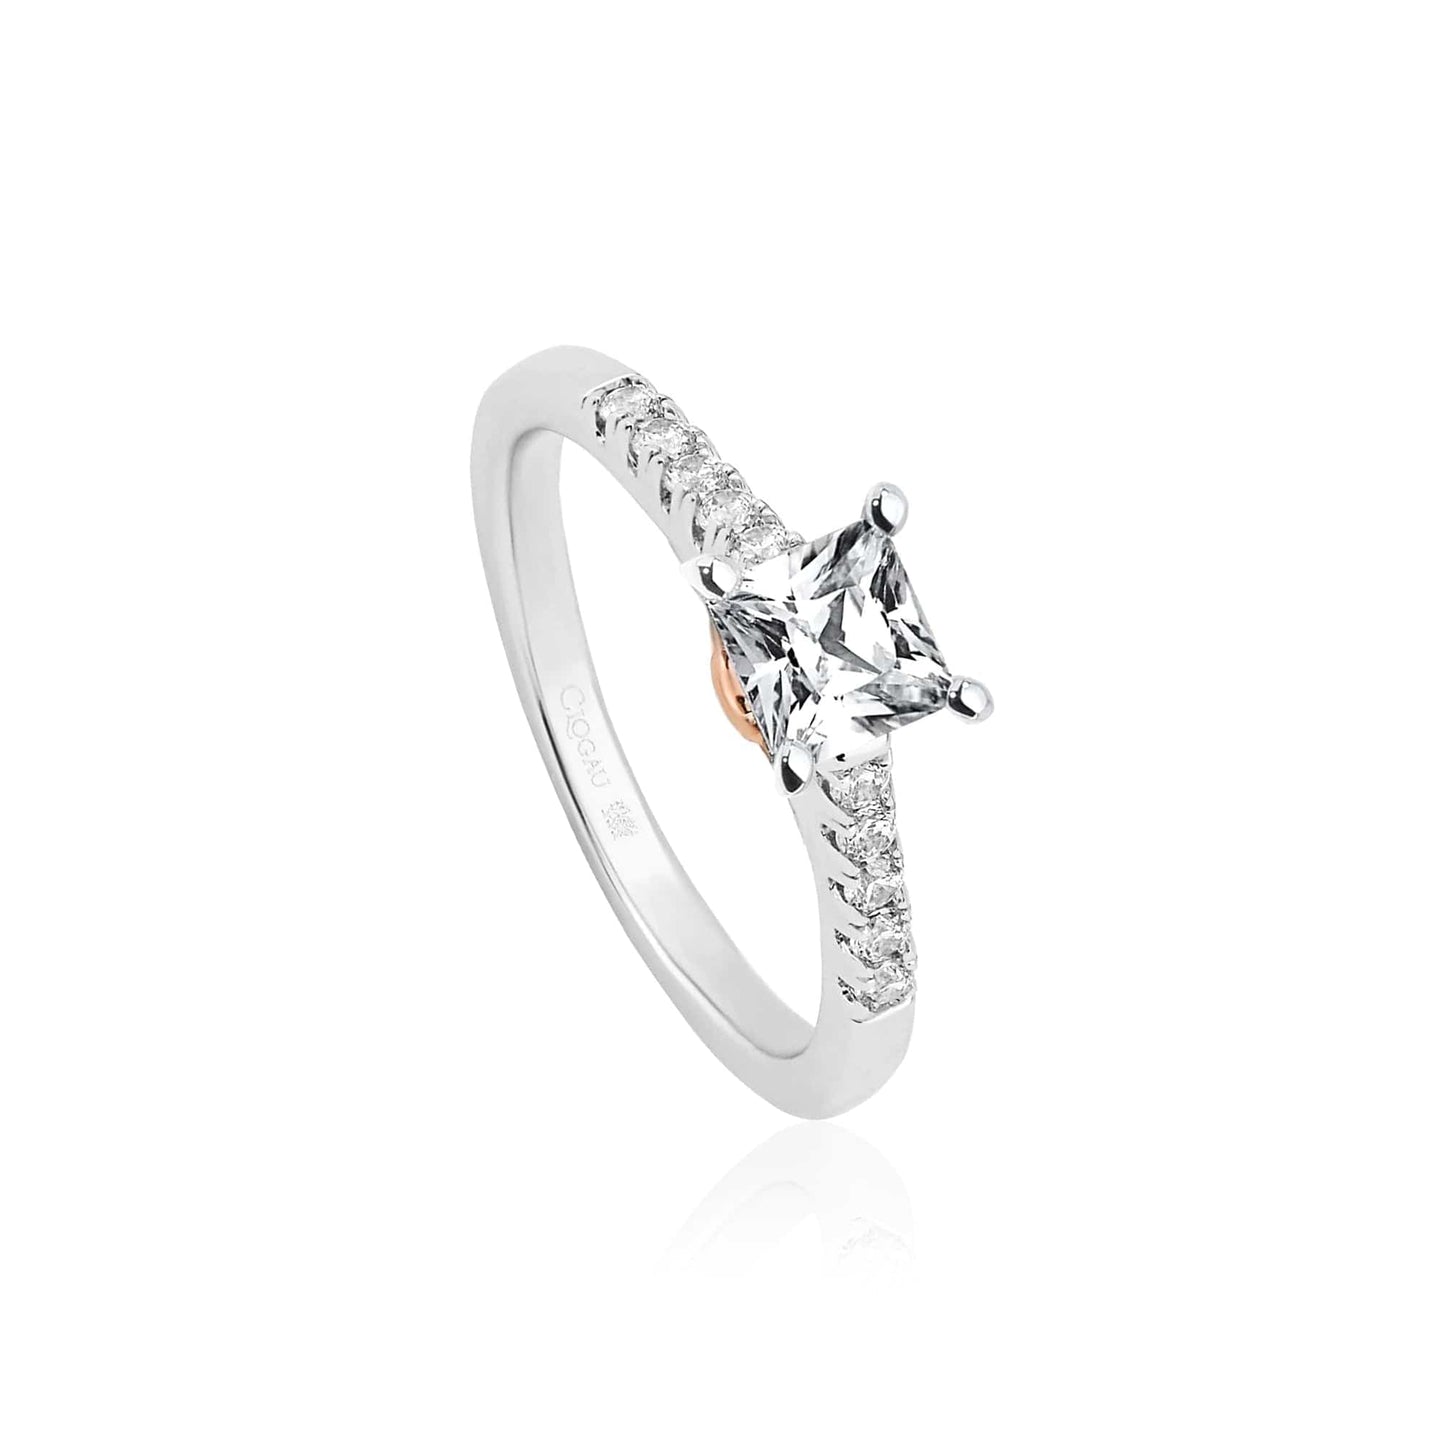 Platinum Timeless Love Engagement Ring with 0.5ct Princess Cut Diamond